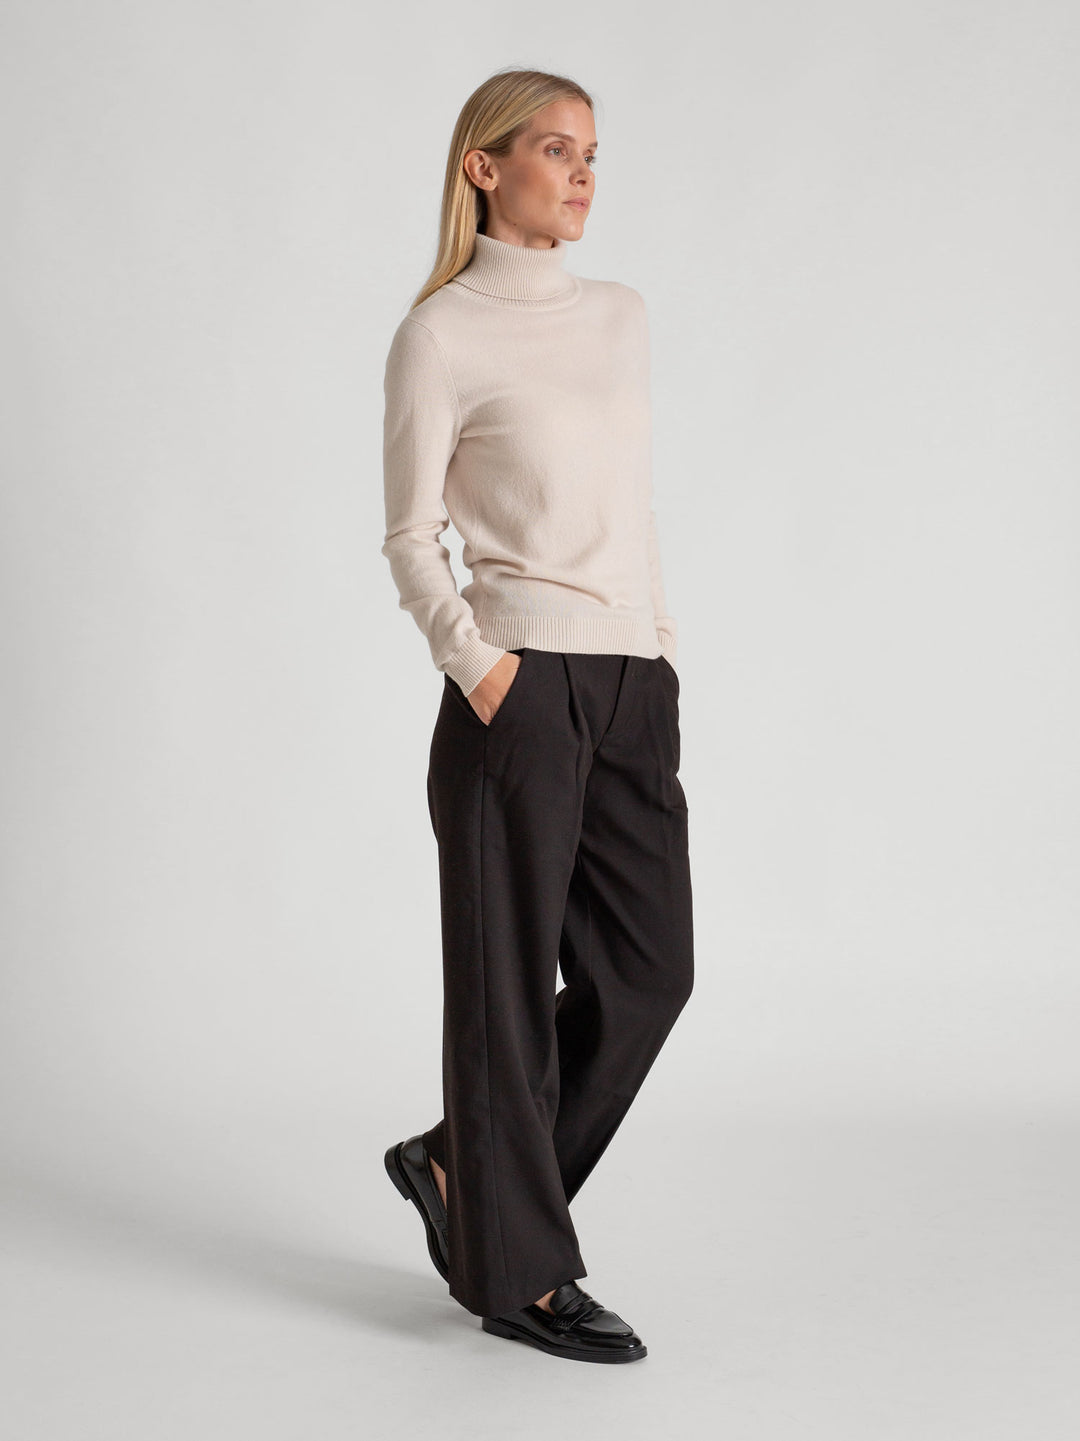 Thin, turtleneck cashmere sweater "Hedda" in 100% pure cashmere. Scandinavian design by Kashmina. Color: Pearl.